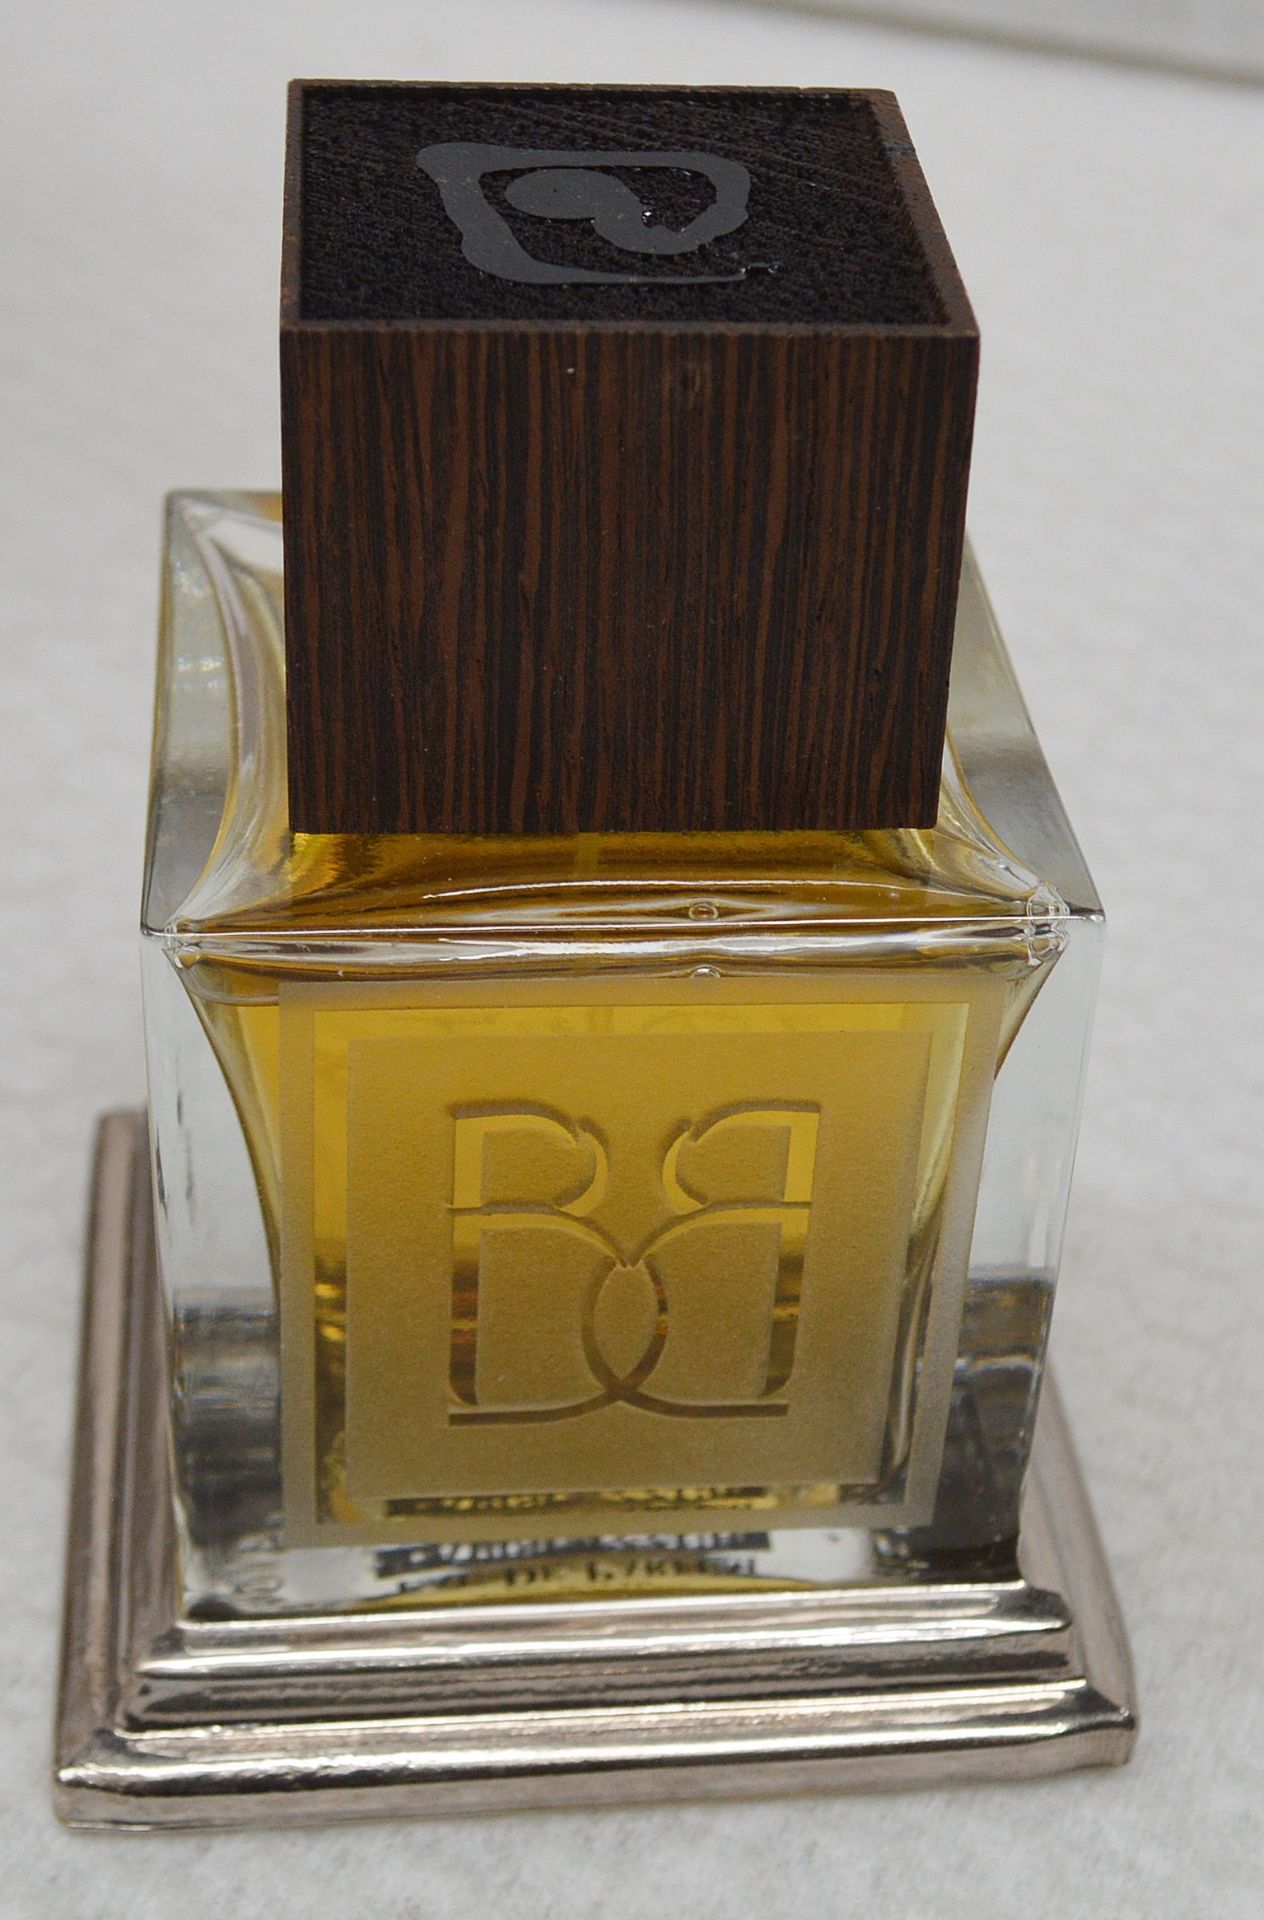 1 x BALDI 'Lapislazzuli' Unisex Eau De Parfum Perfume - 100ml / 3.4 Fl Oz Bottle - New/Boxed Stock -